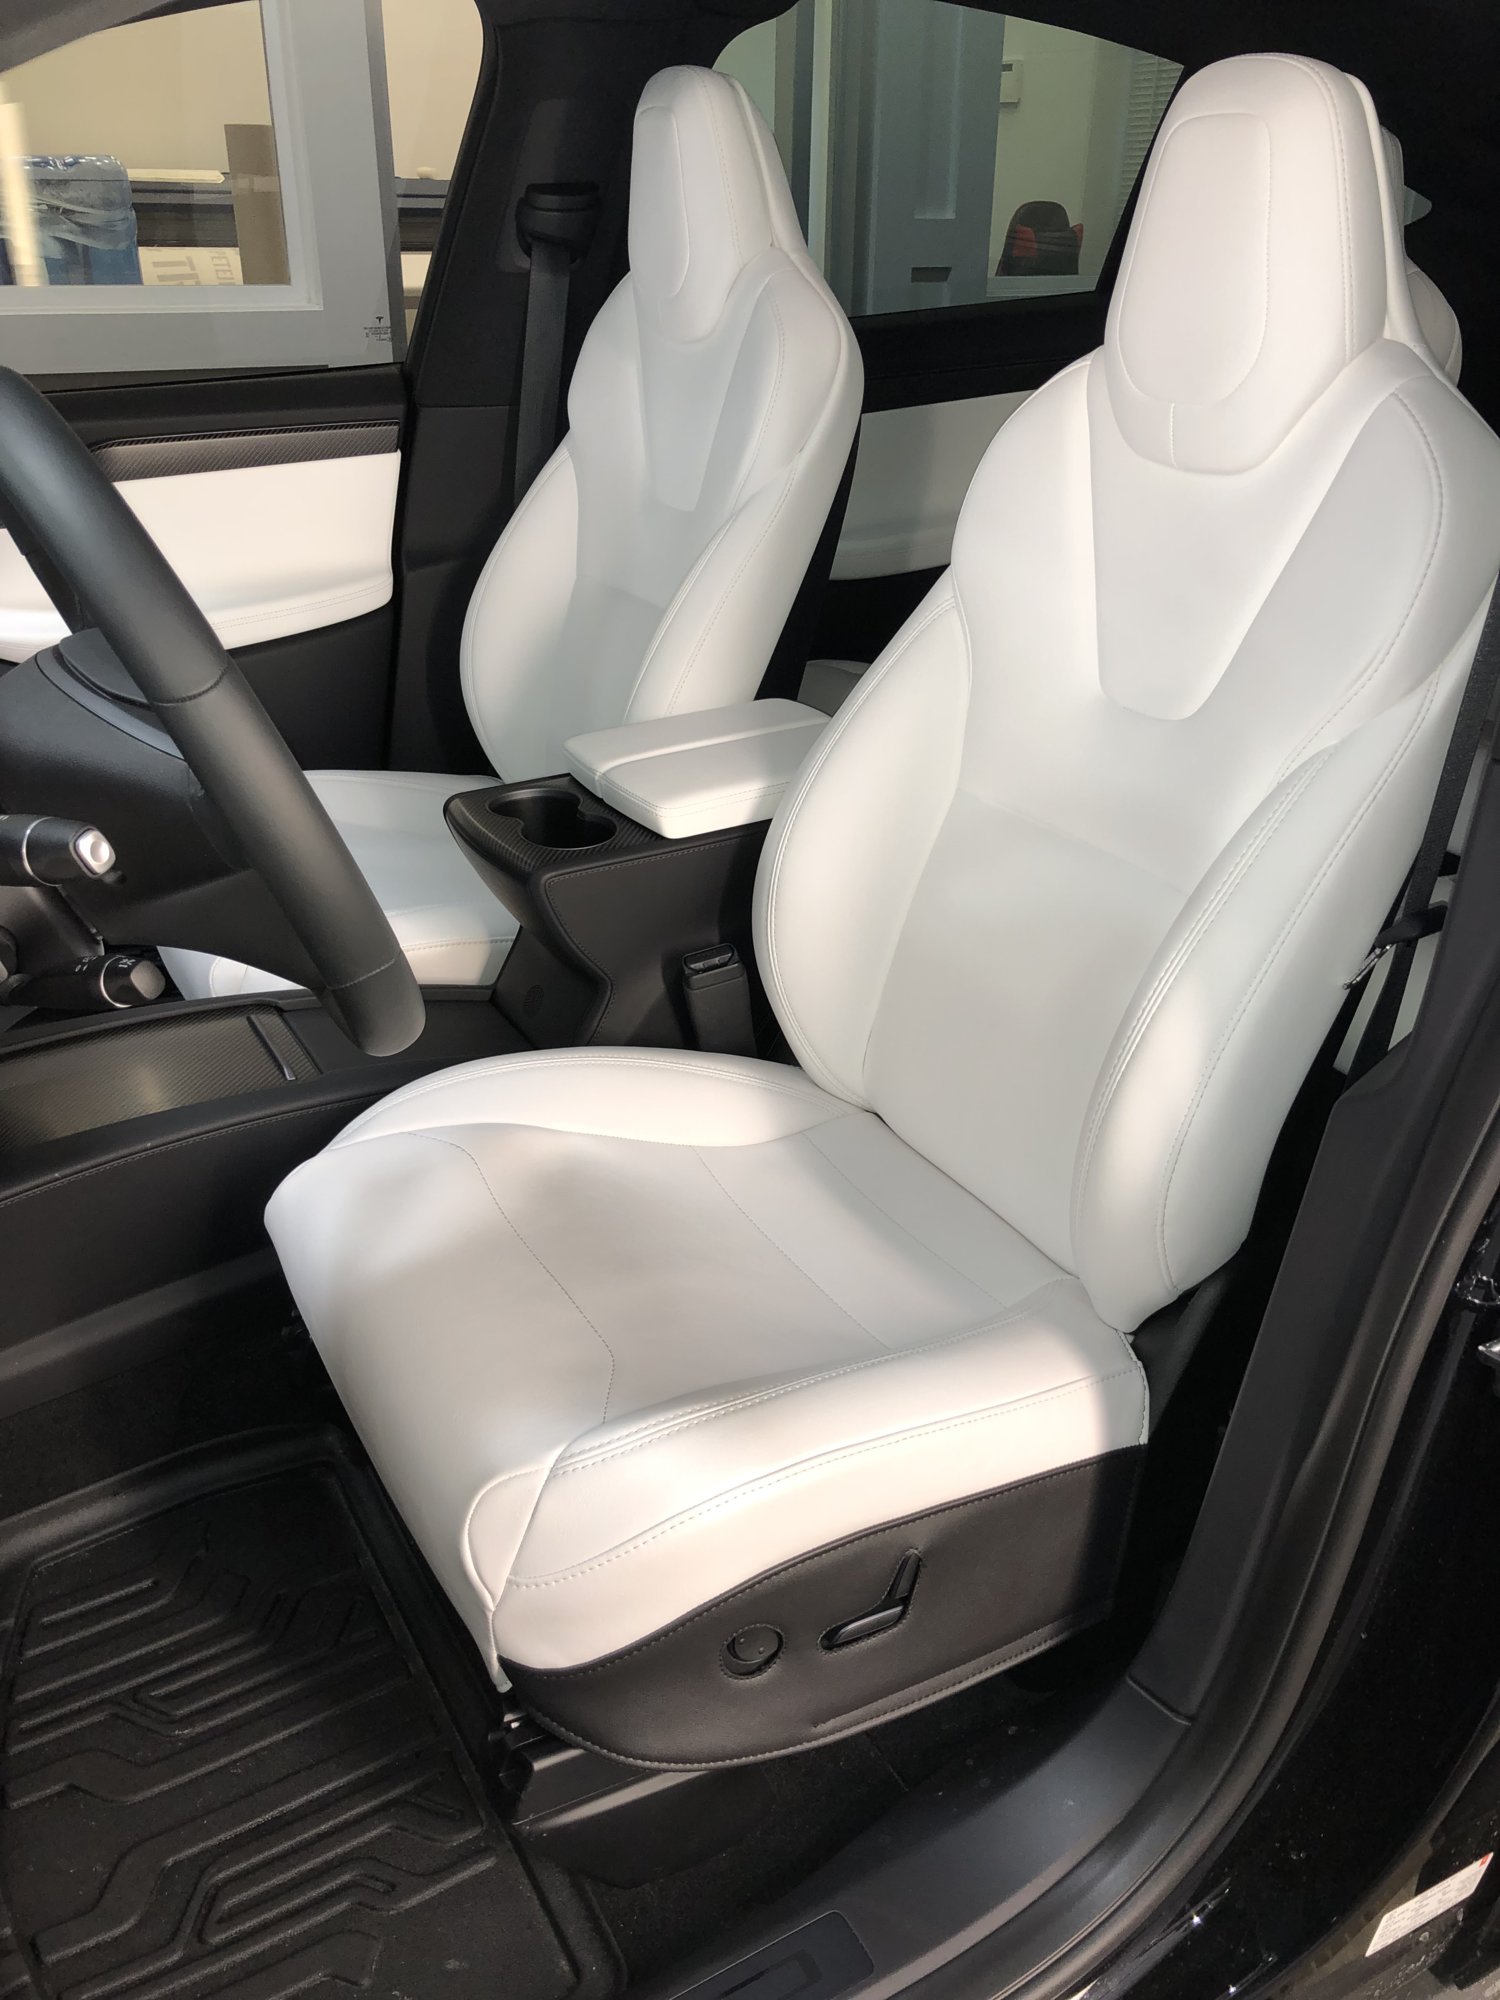 cleaning white seats | Tesla Motors Club